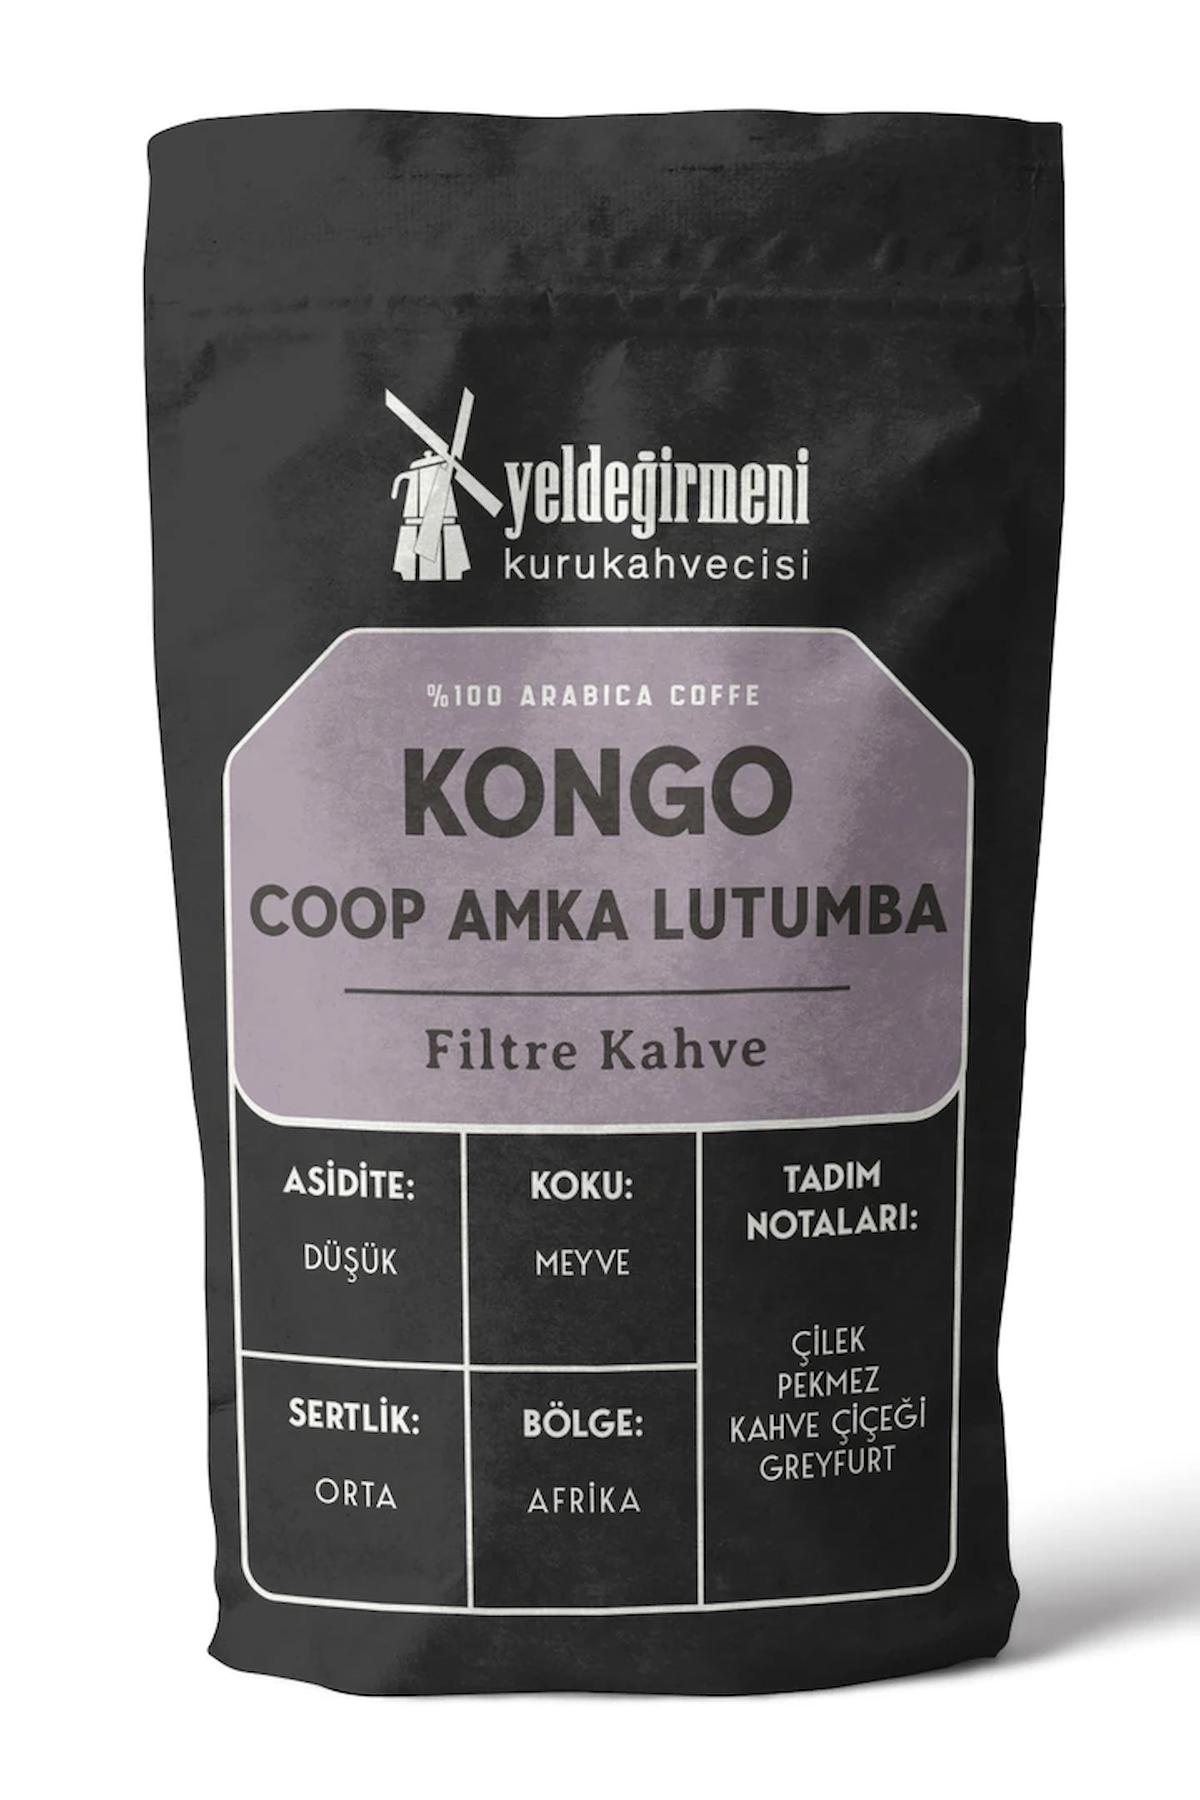 Yeldeğirmeni Kurukahvecisi Kongo Coop Amka Lutumba Filtre Kahve 1 kg